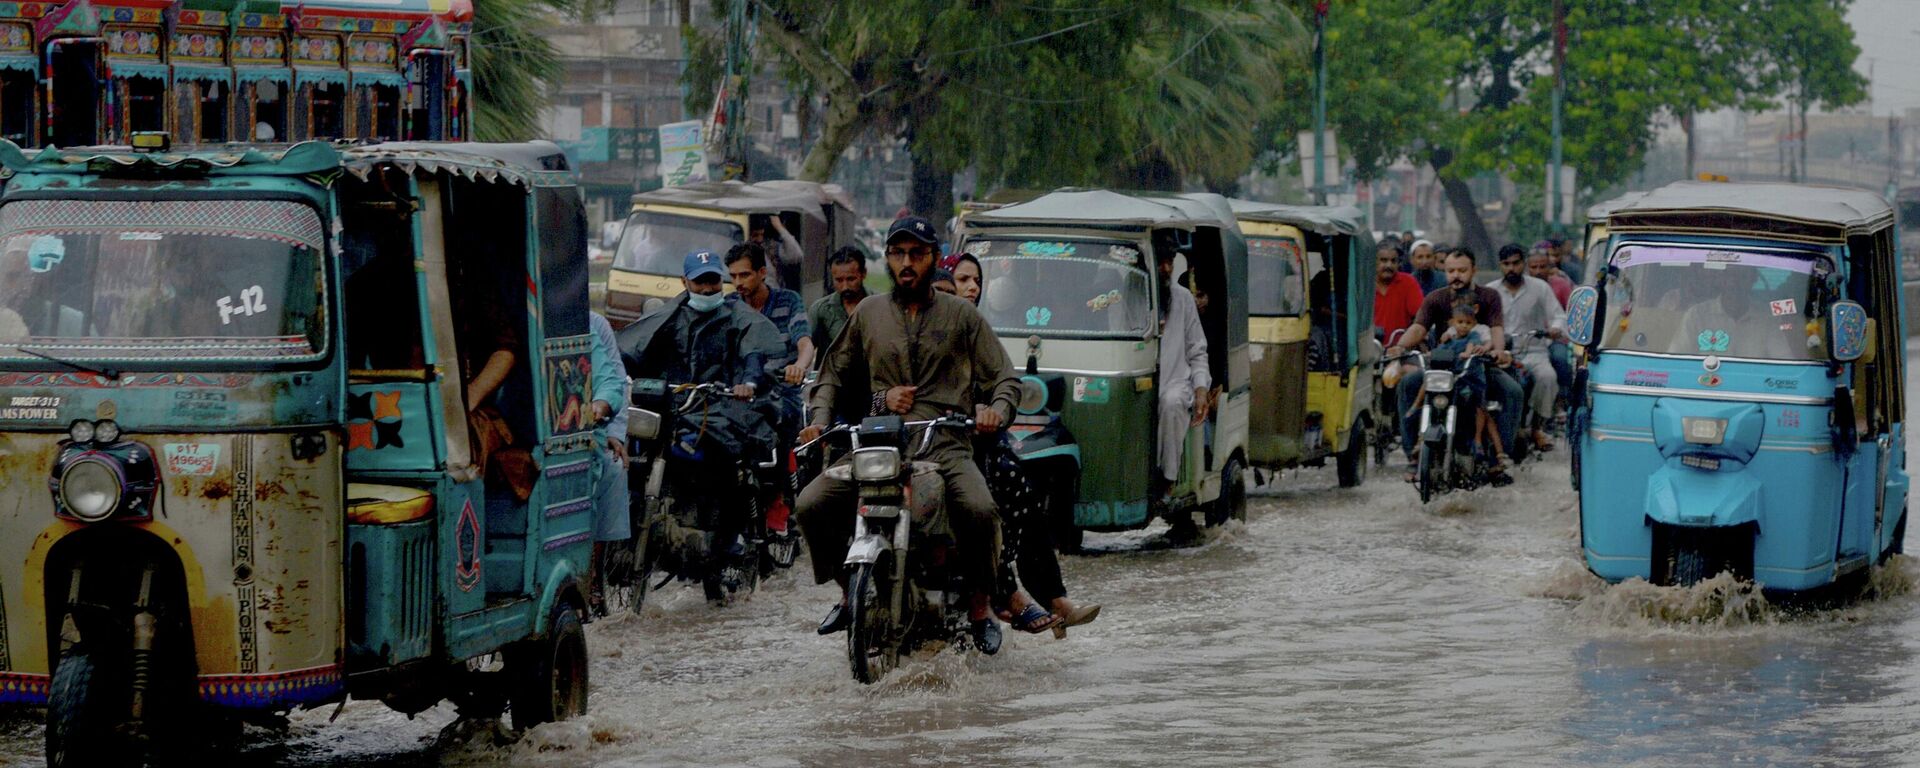 Motorists make their way through a flooded street after heavy rains in Karachi on September 12, 2022. - Sputnik International, 1920, 18.09.2022